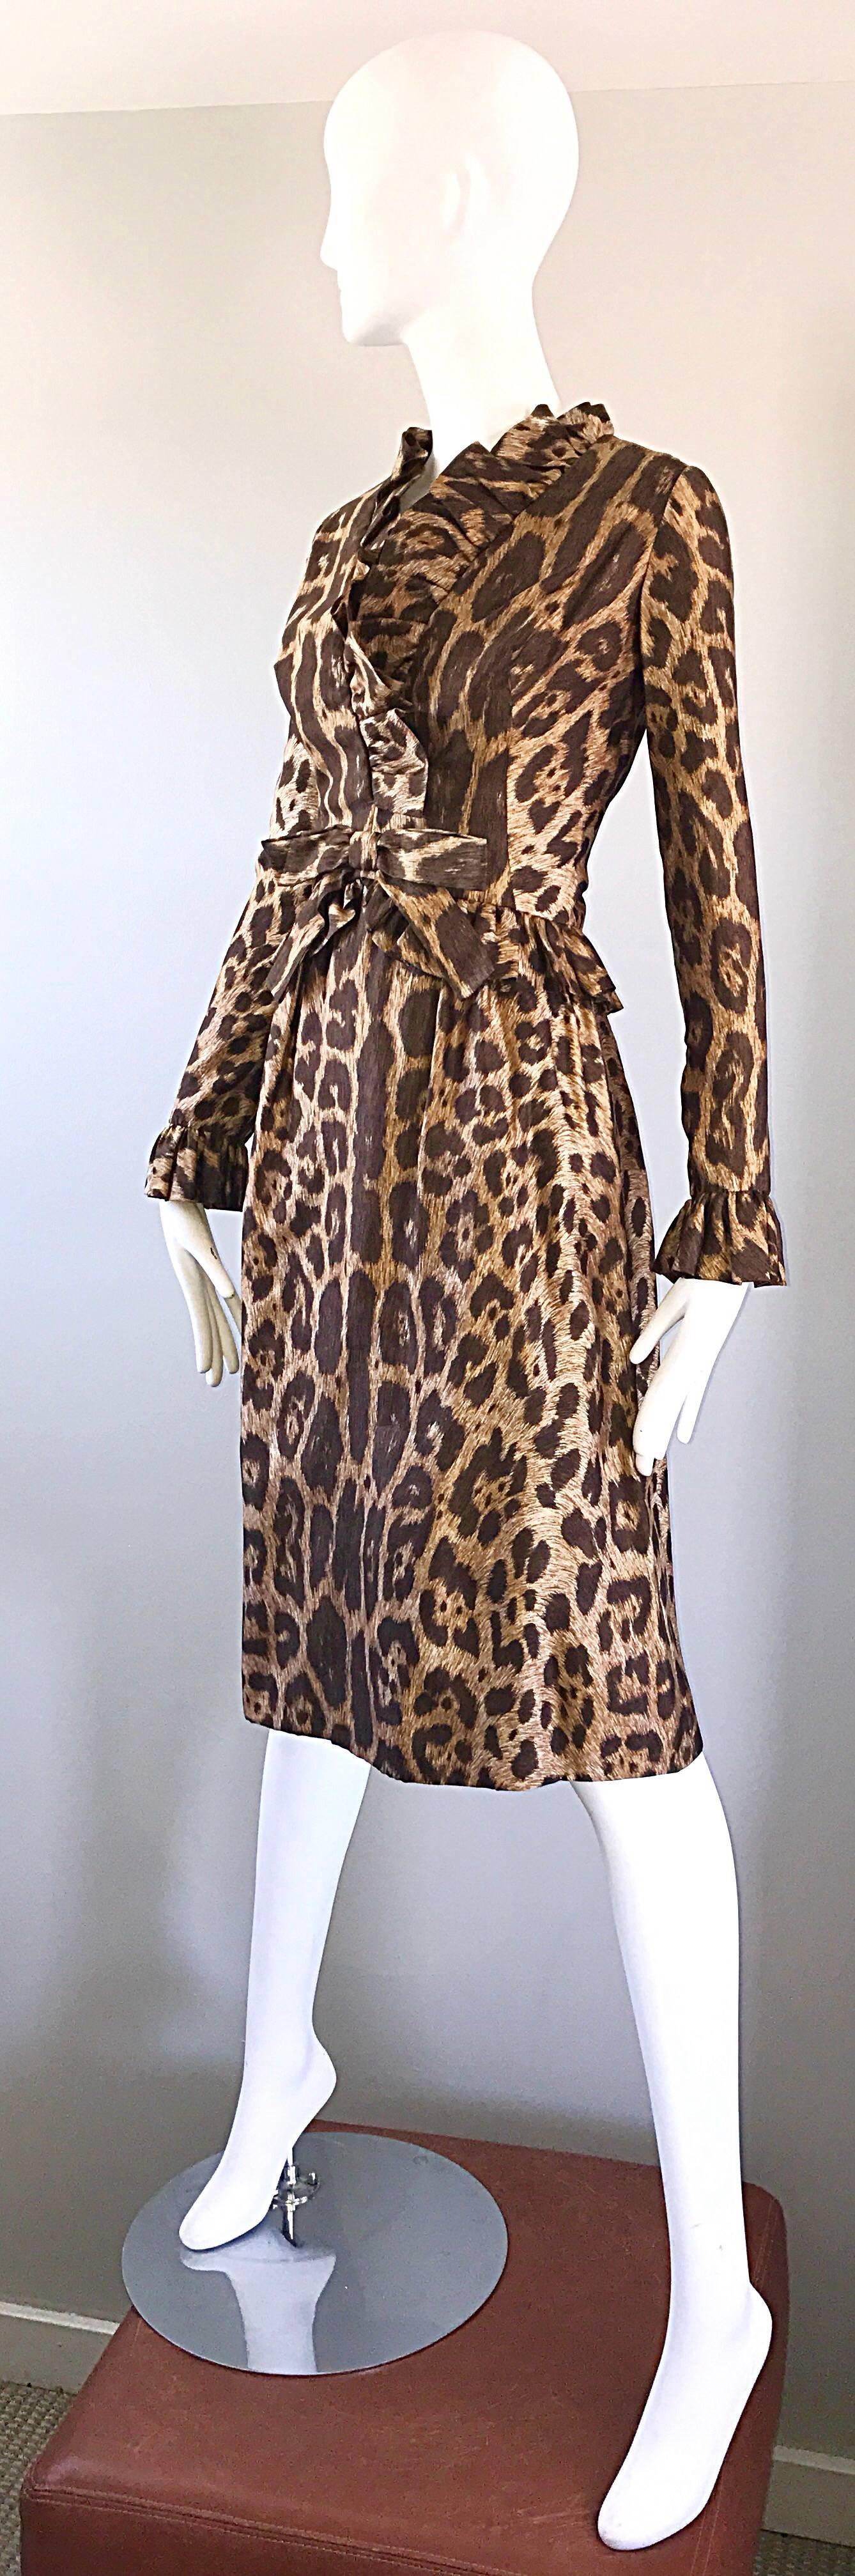 Mollie Parnis 1960s Chic Leopard Cheetah Print Silk Vintage 60s A Line Dress  1